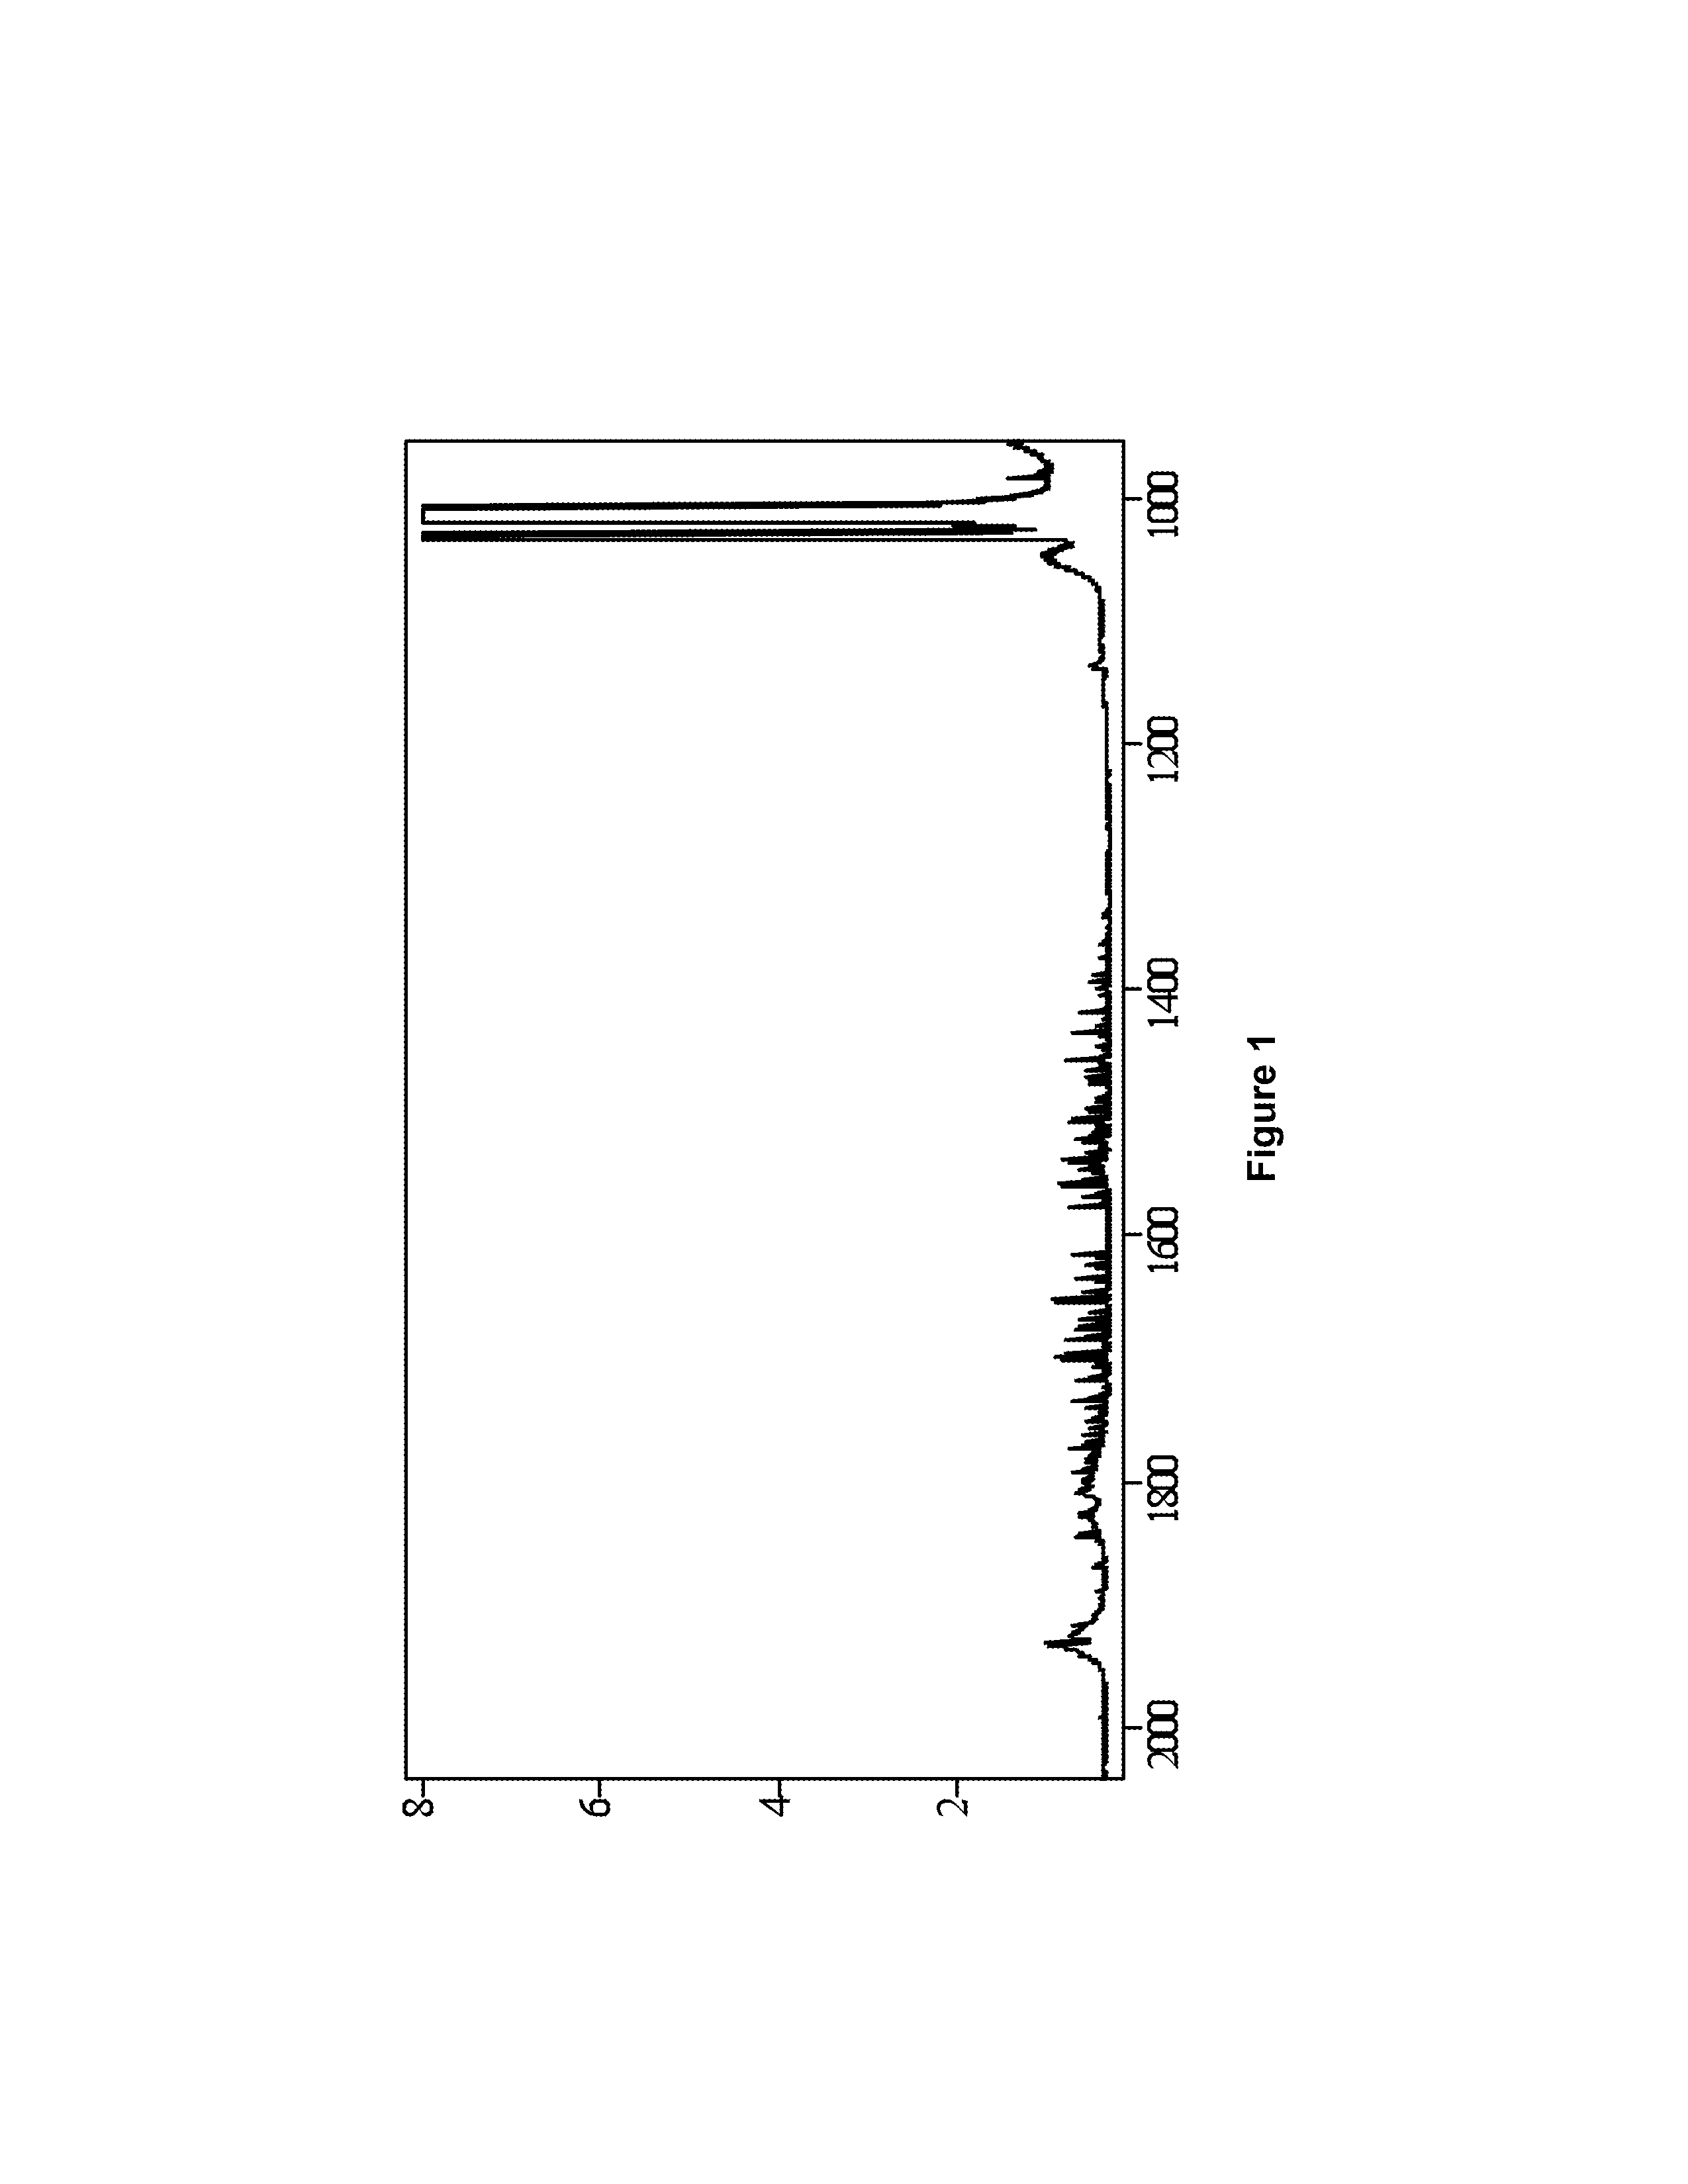 Method for production of nitrogen trifluoride from trimethylsilylamines